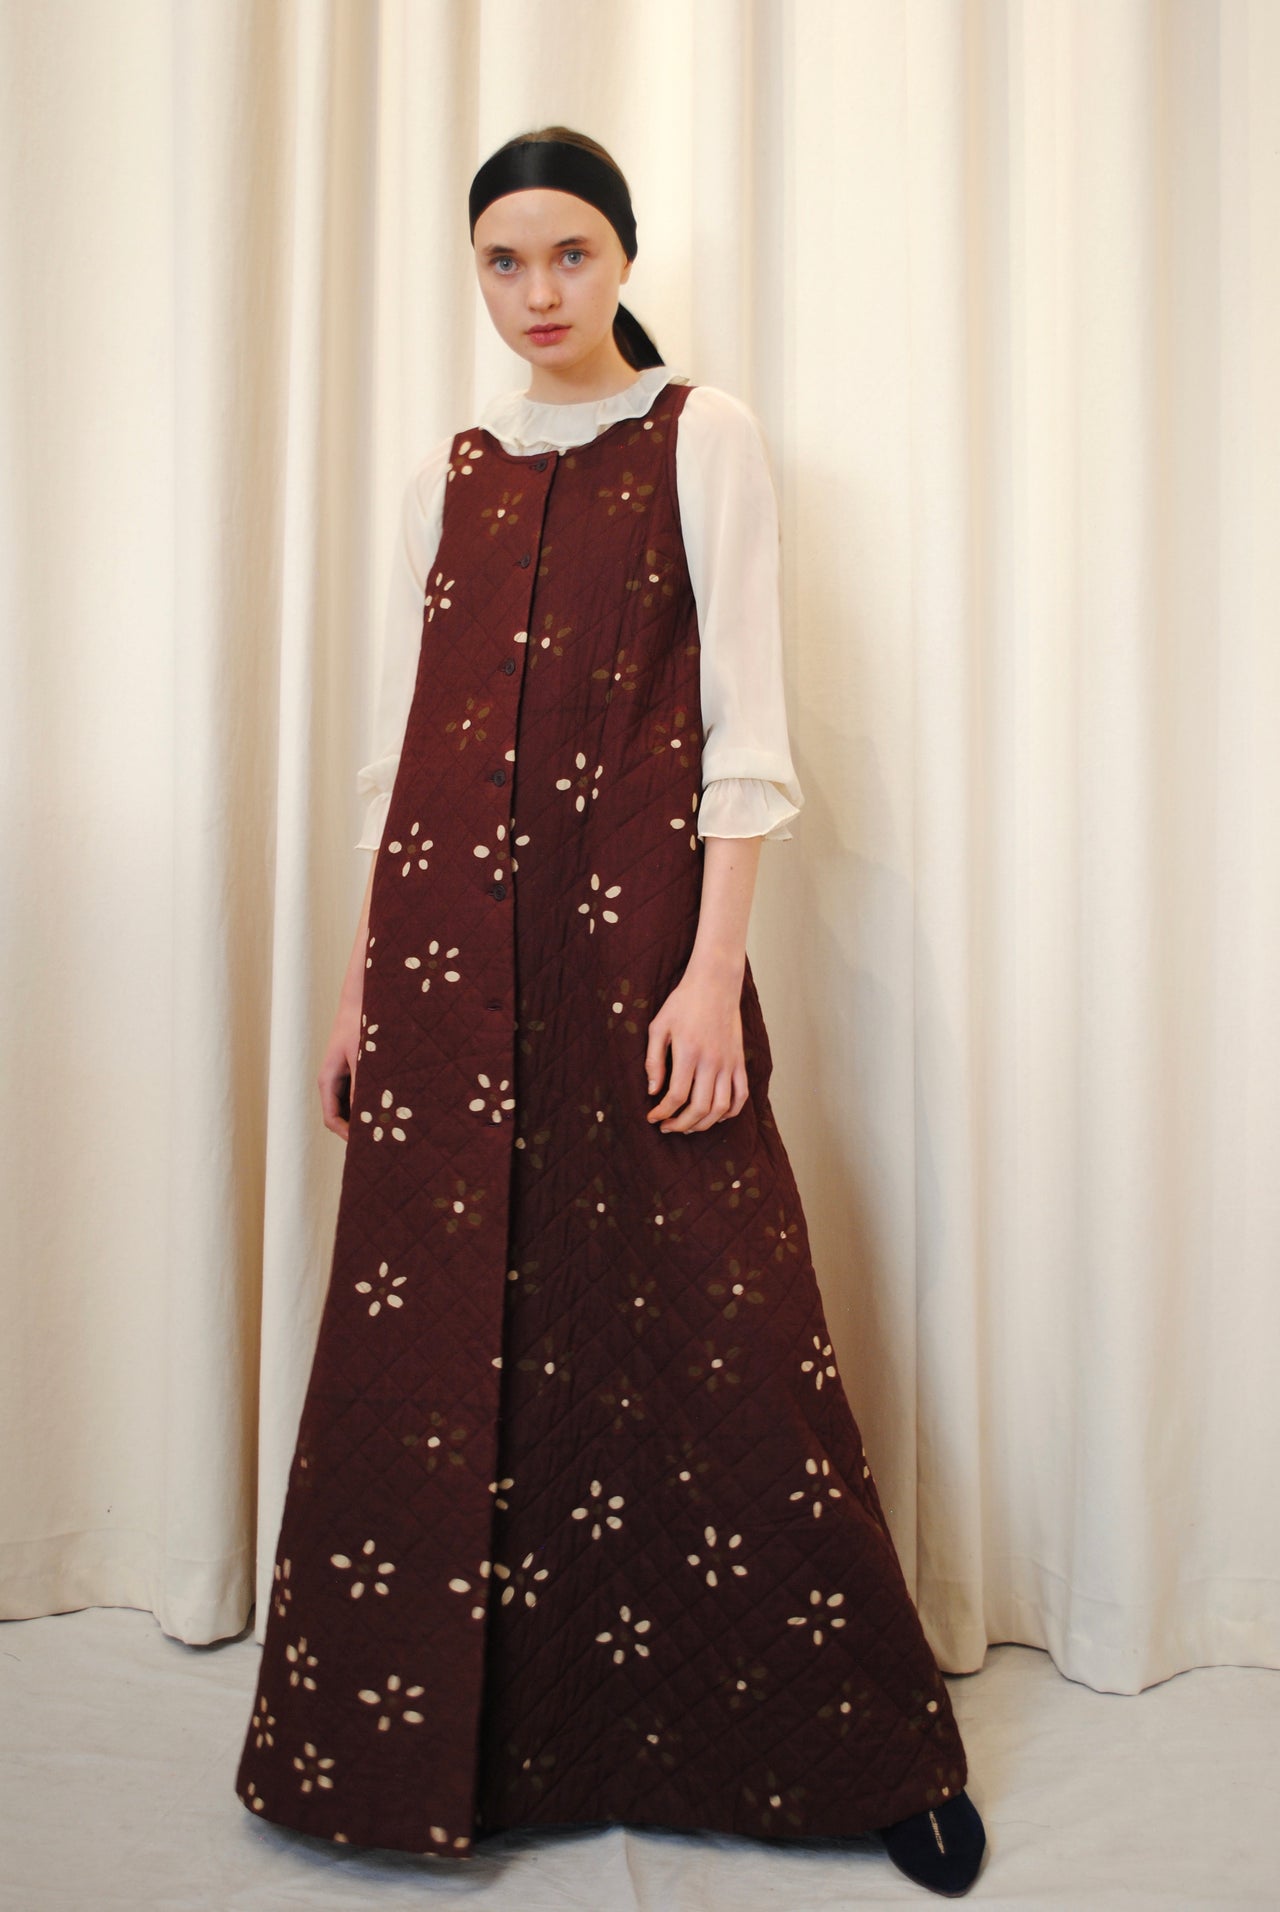 Marimekko Quilted Cotton Dress - Desert Vintage